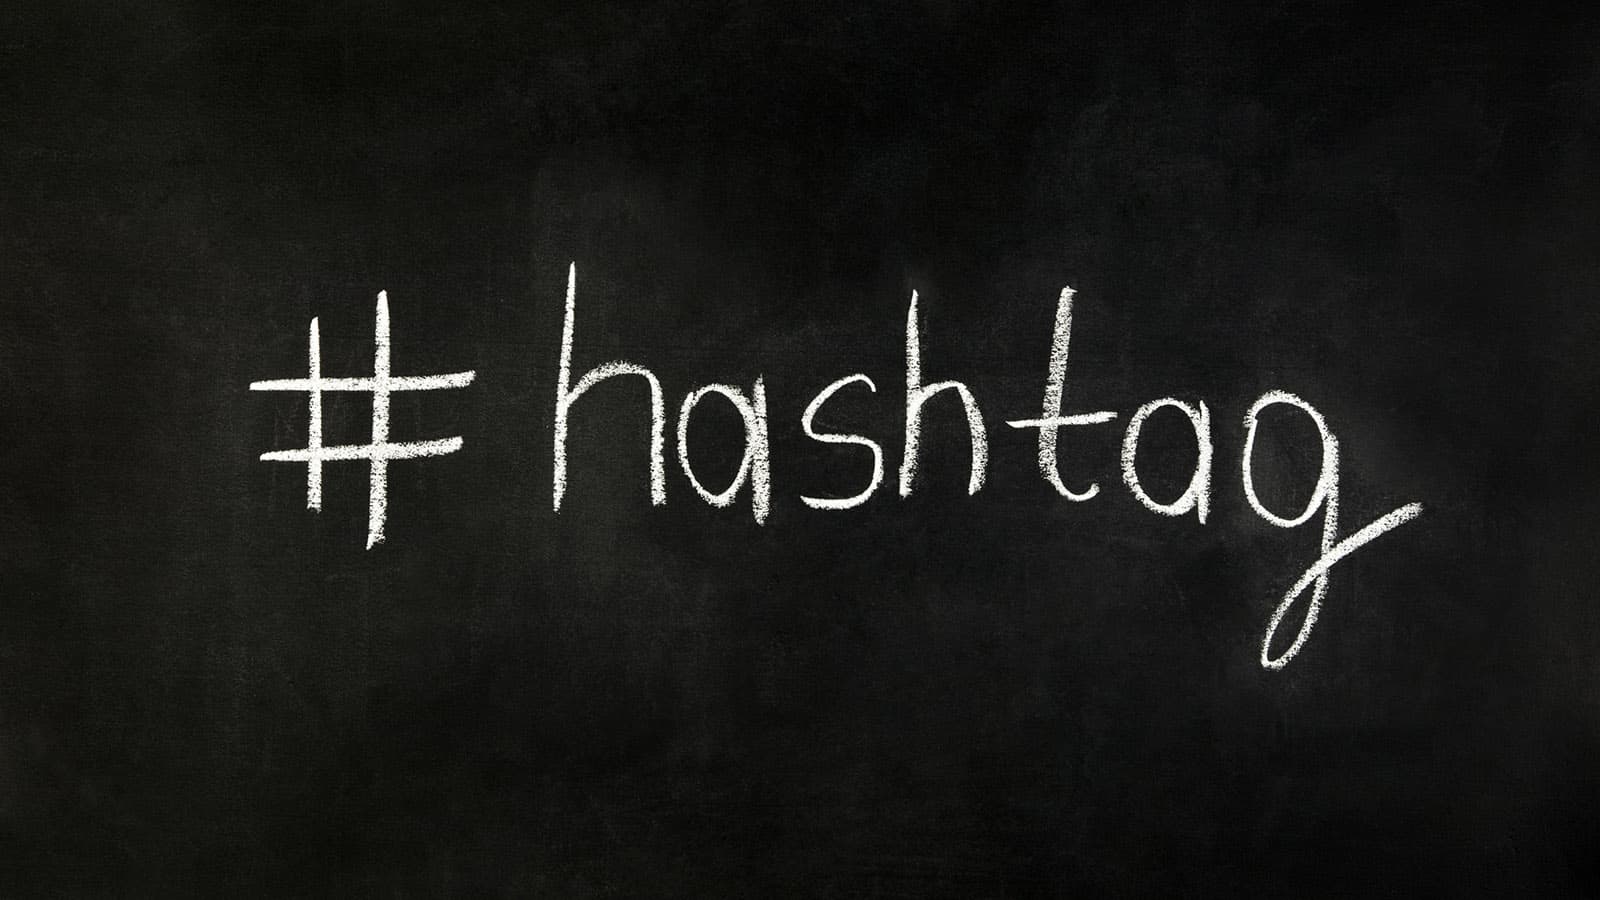 Use of hashtag